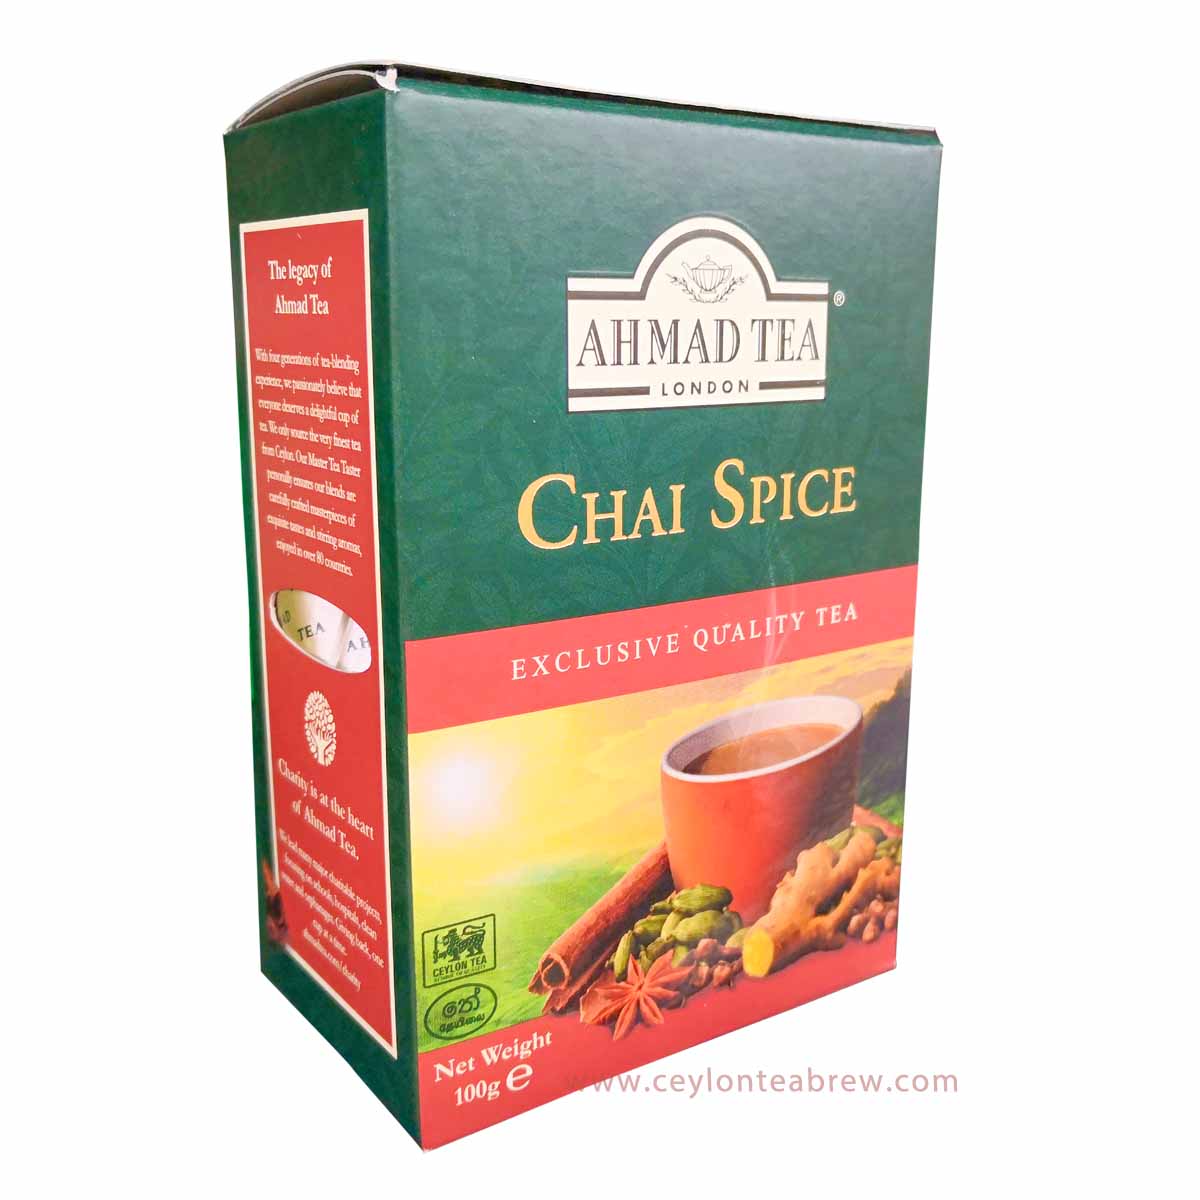 Ahmed Tea Chai Spice tea